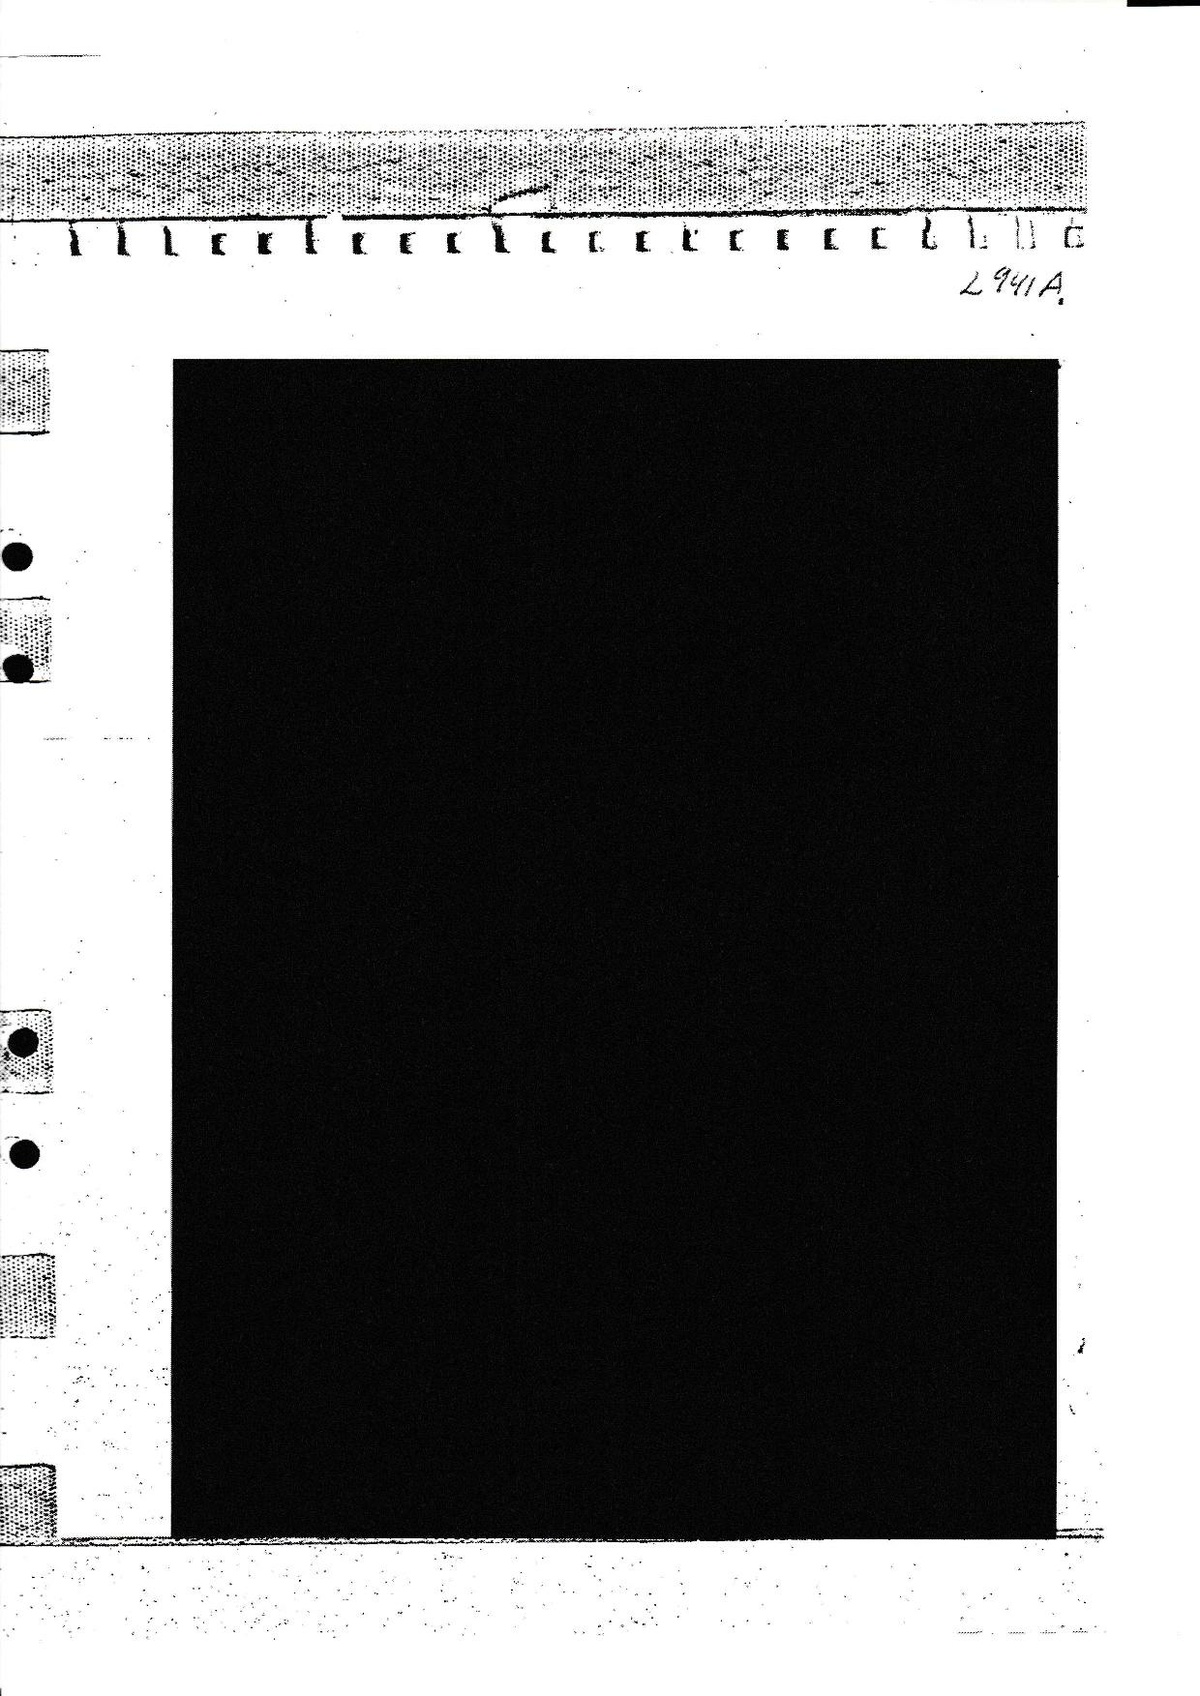 Pol-1987-04-02 L941-00-D Biobesökare.pdf